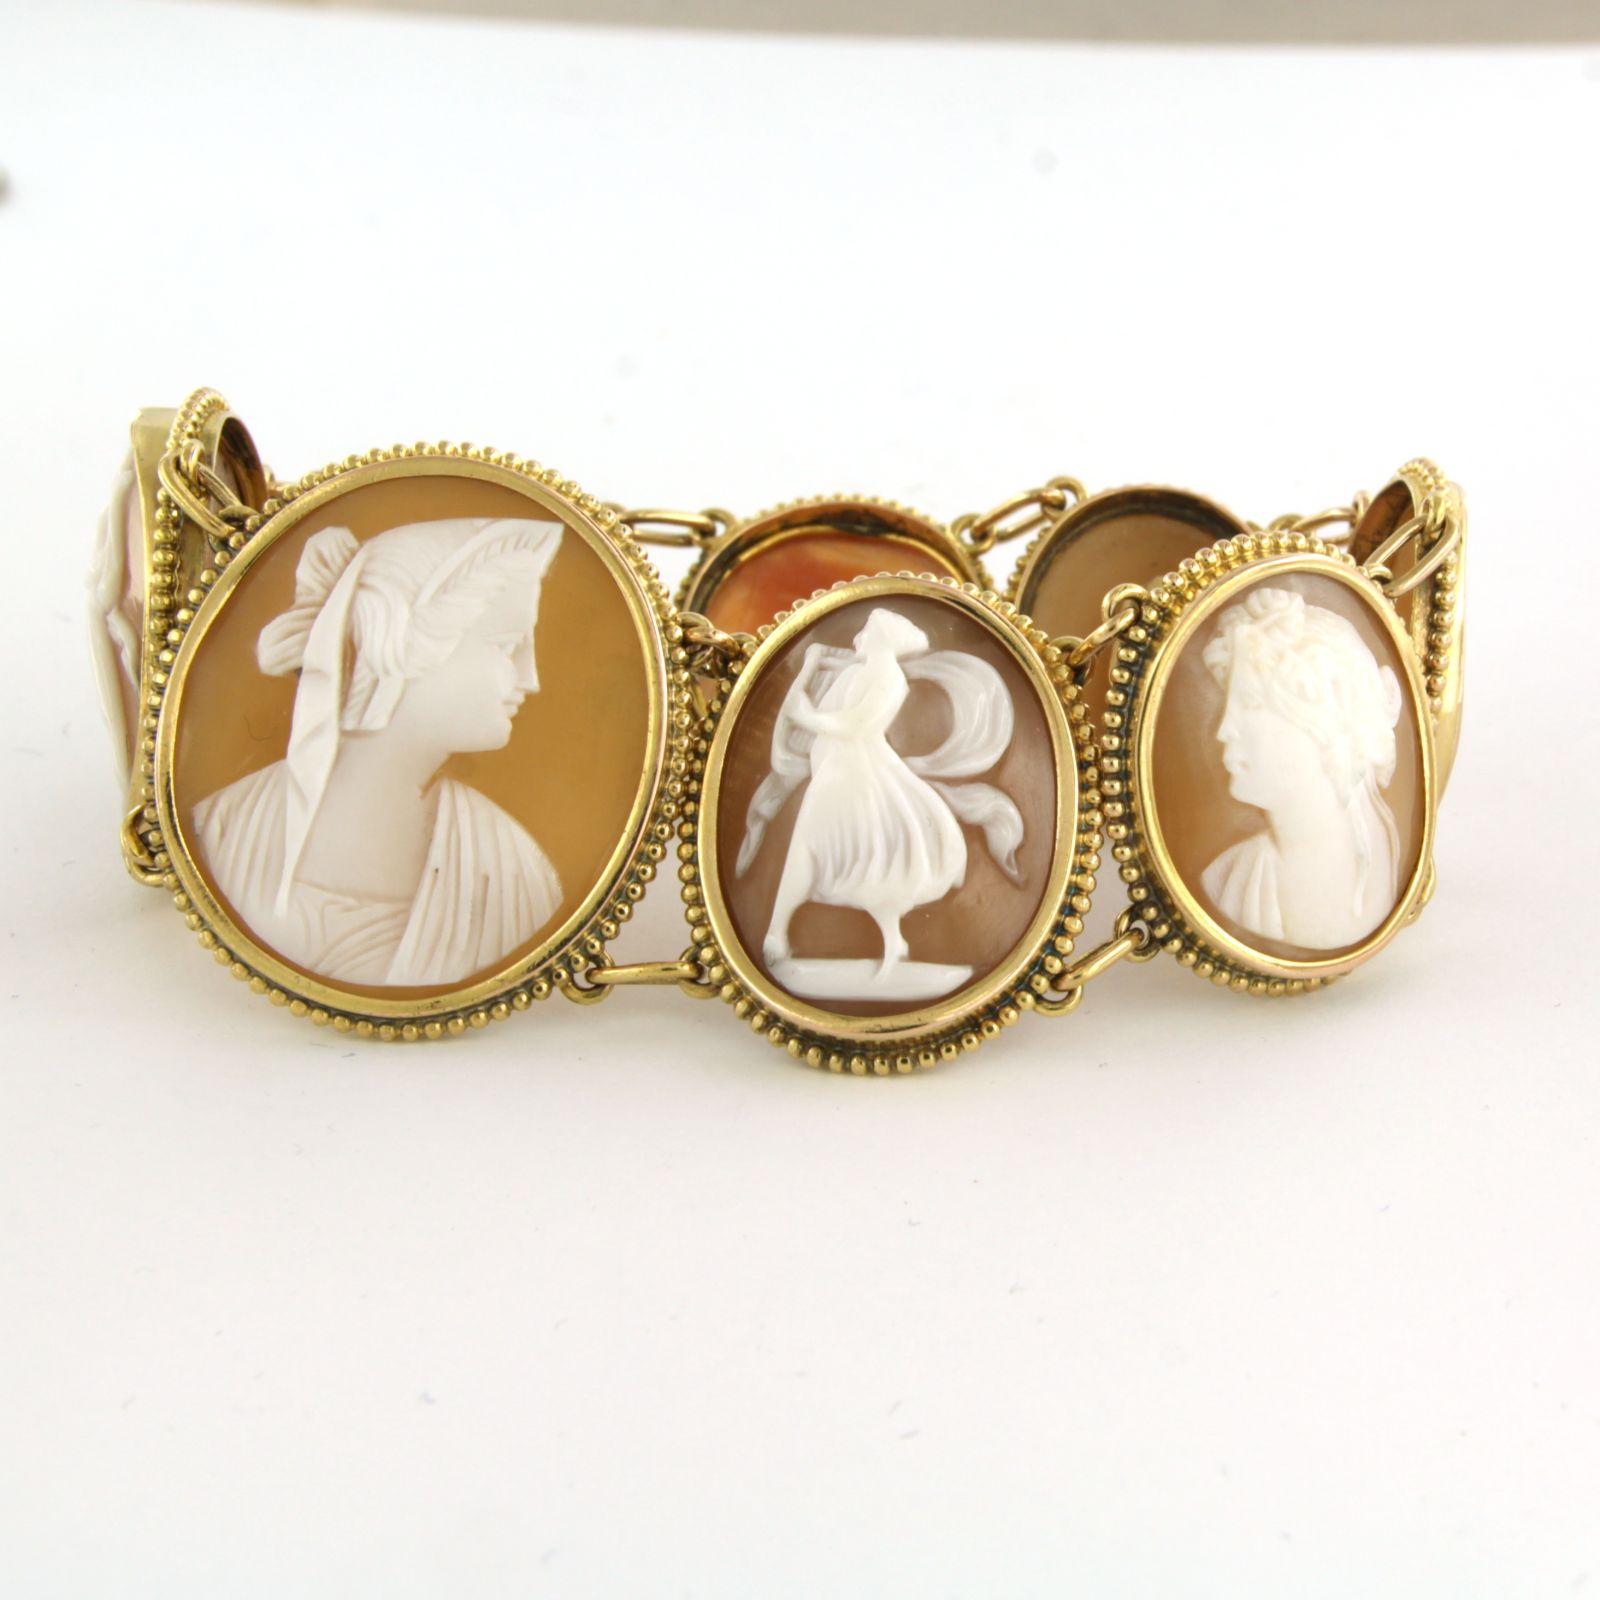 Women's Bracelet with ladies portrait camee For Sale